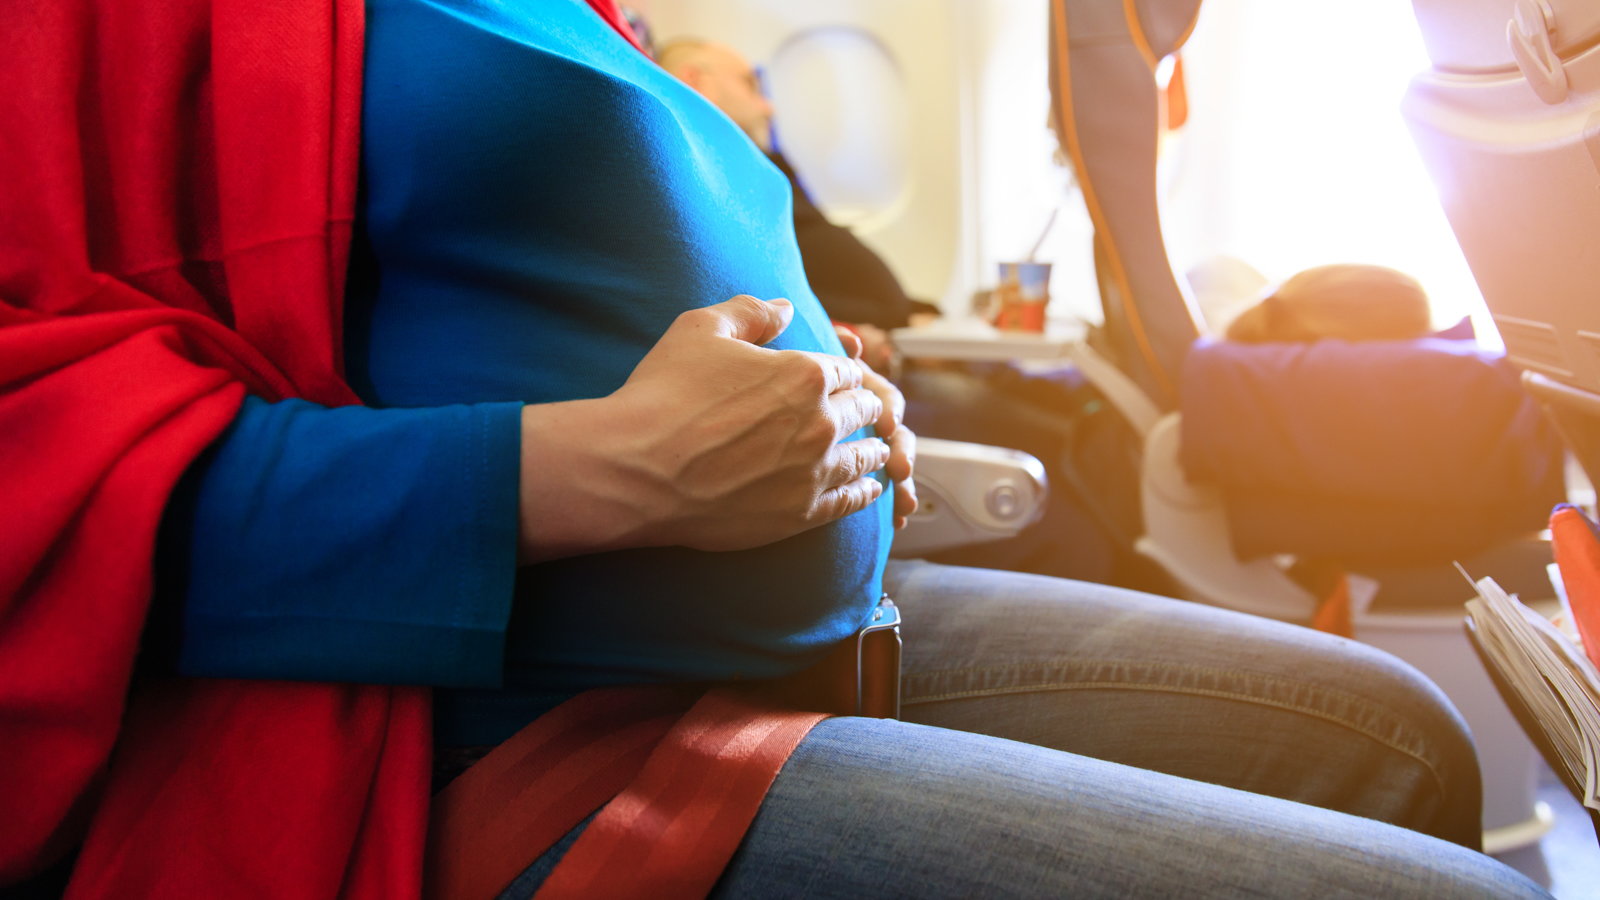 pregnant woman sitting on plane